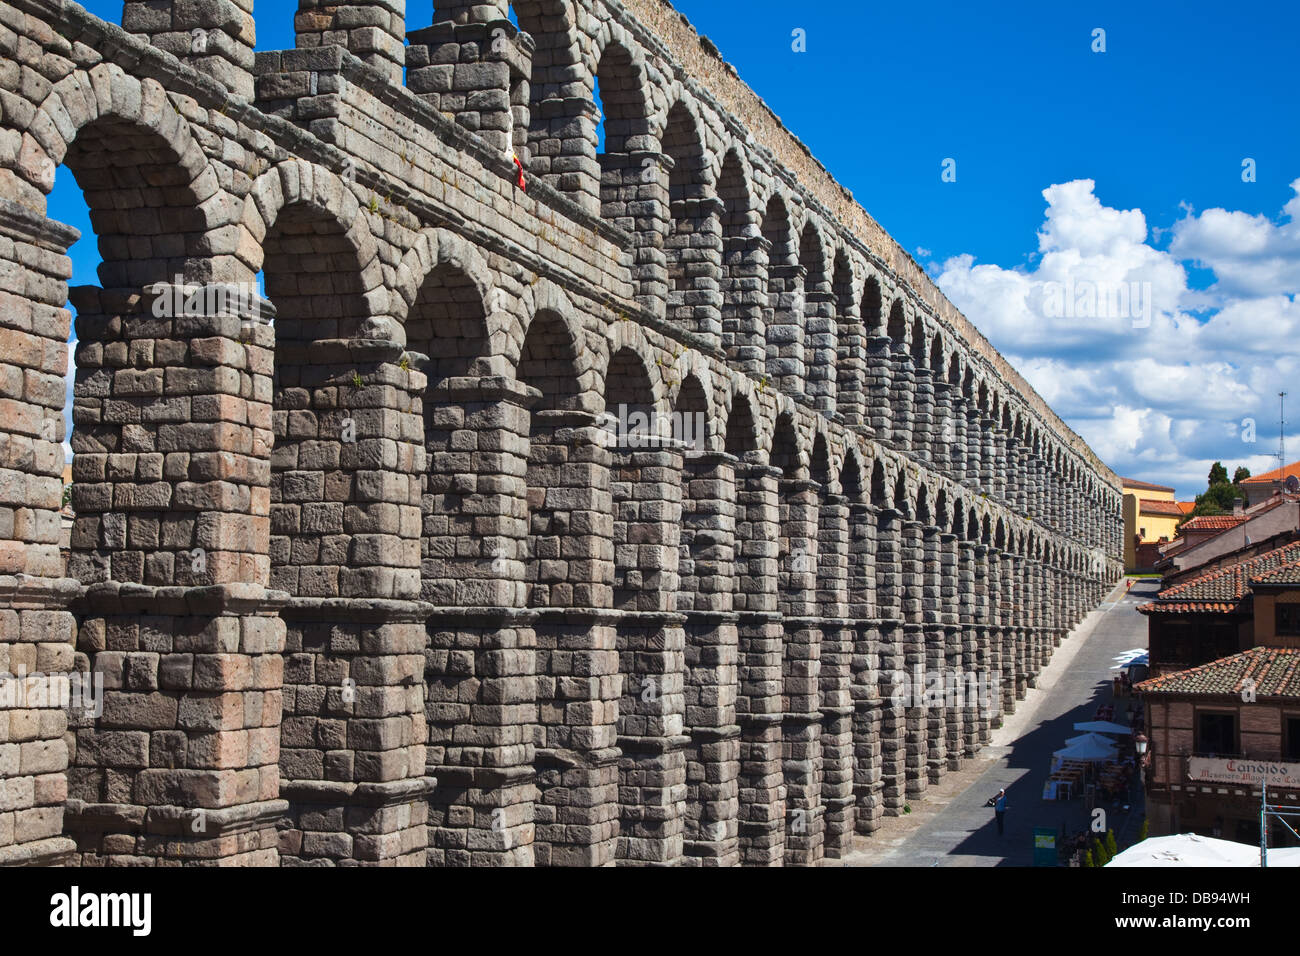 Roman aqueduct spanning the city of Segovia in Spain Stock Photo